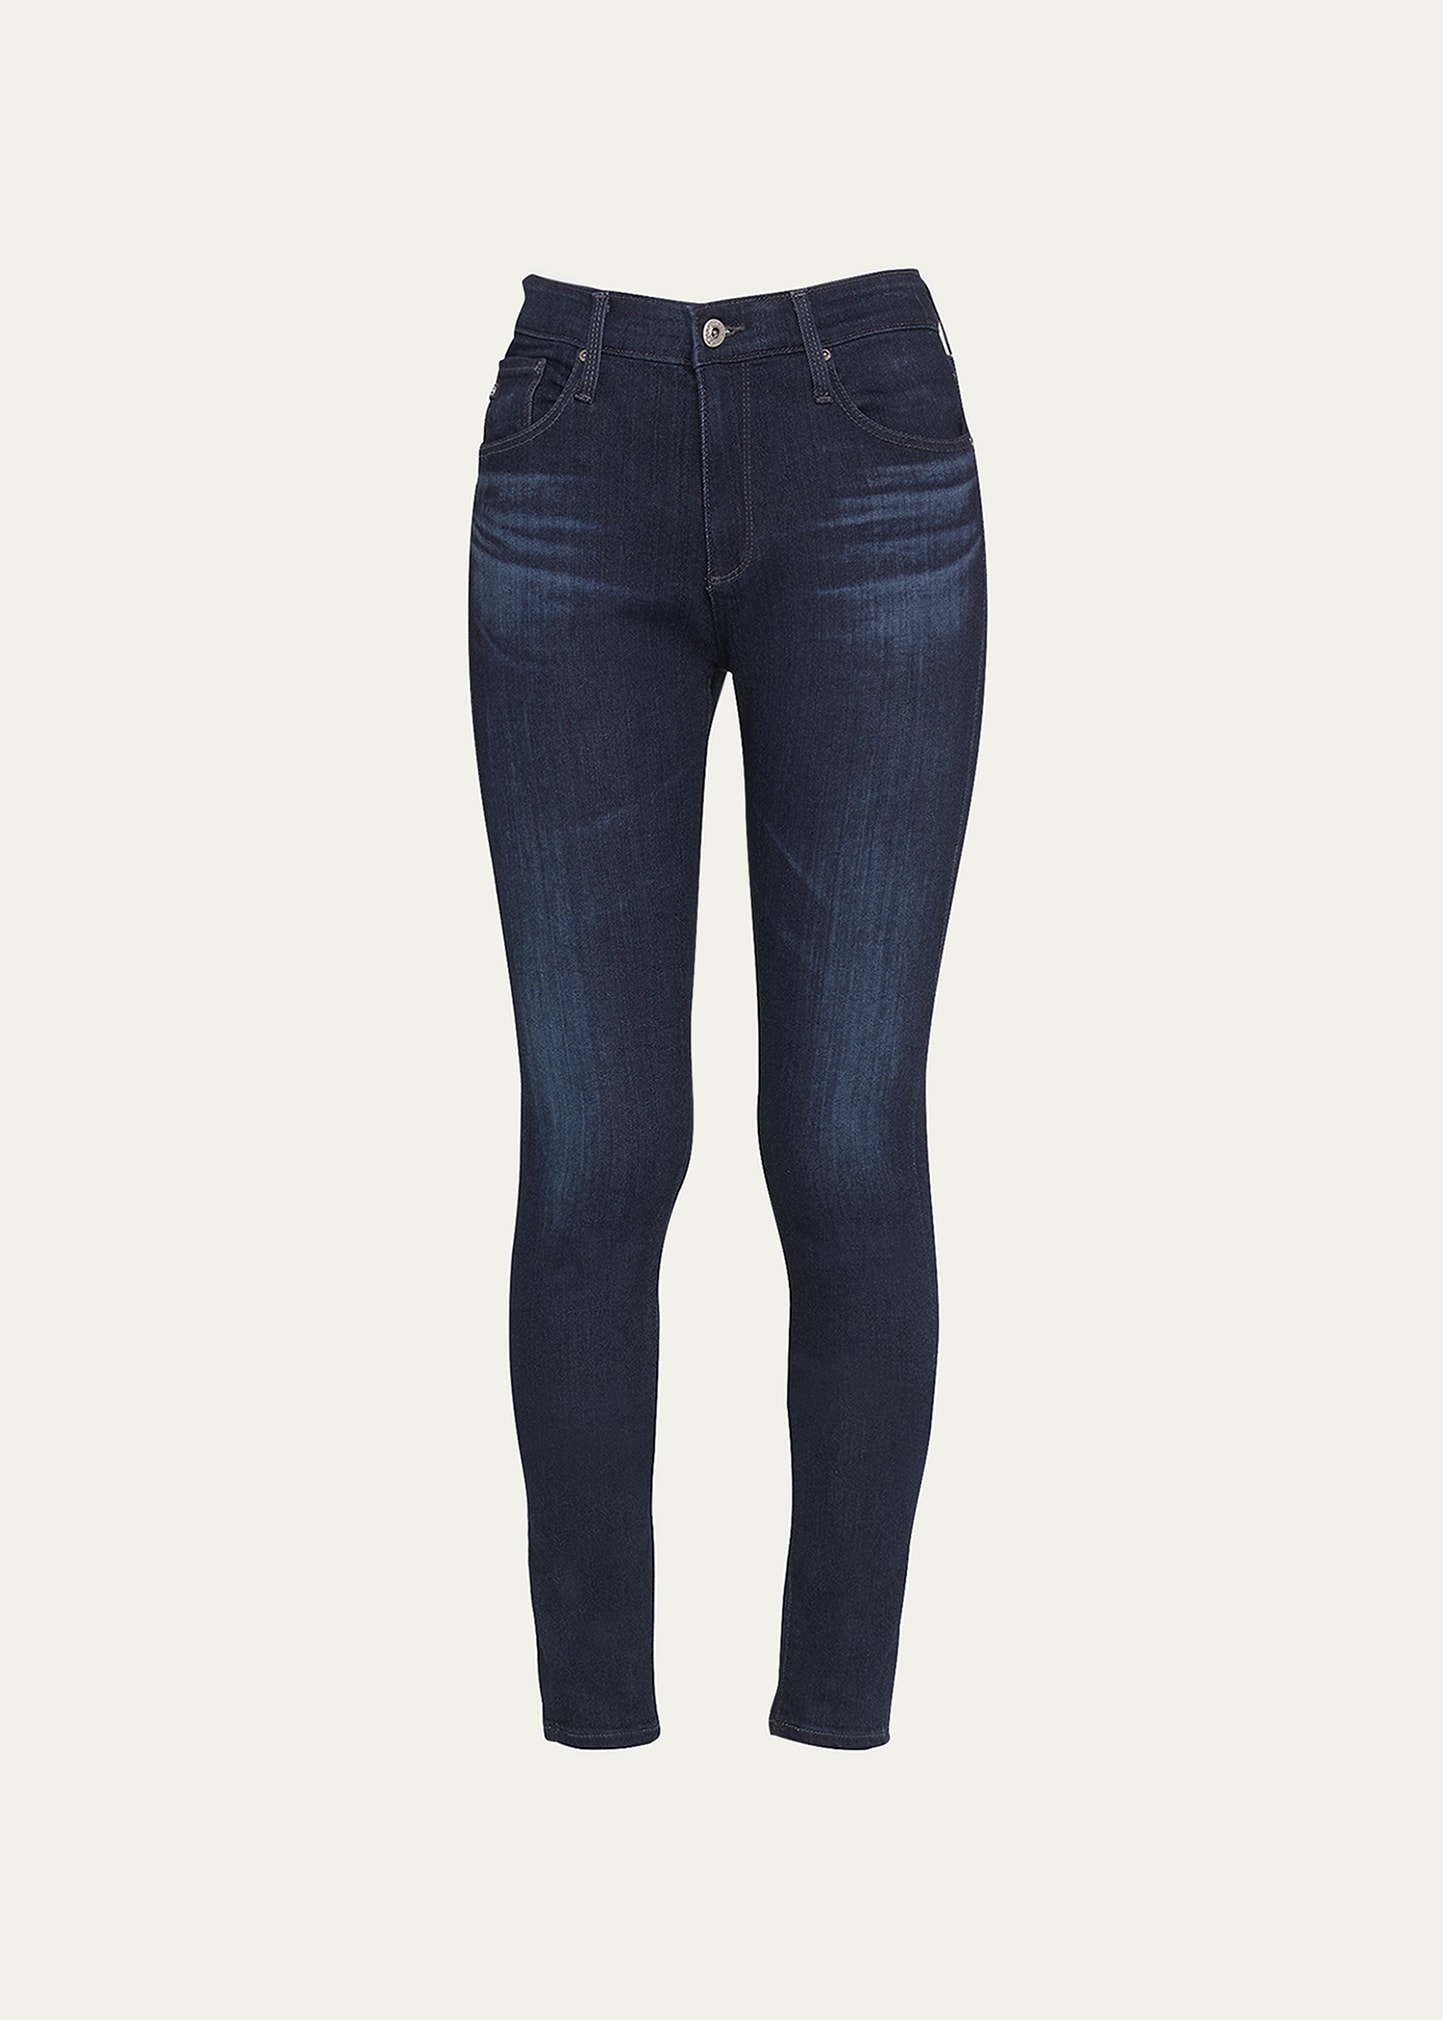 The Farrah High-Rise Skinny Jeans